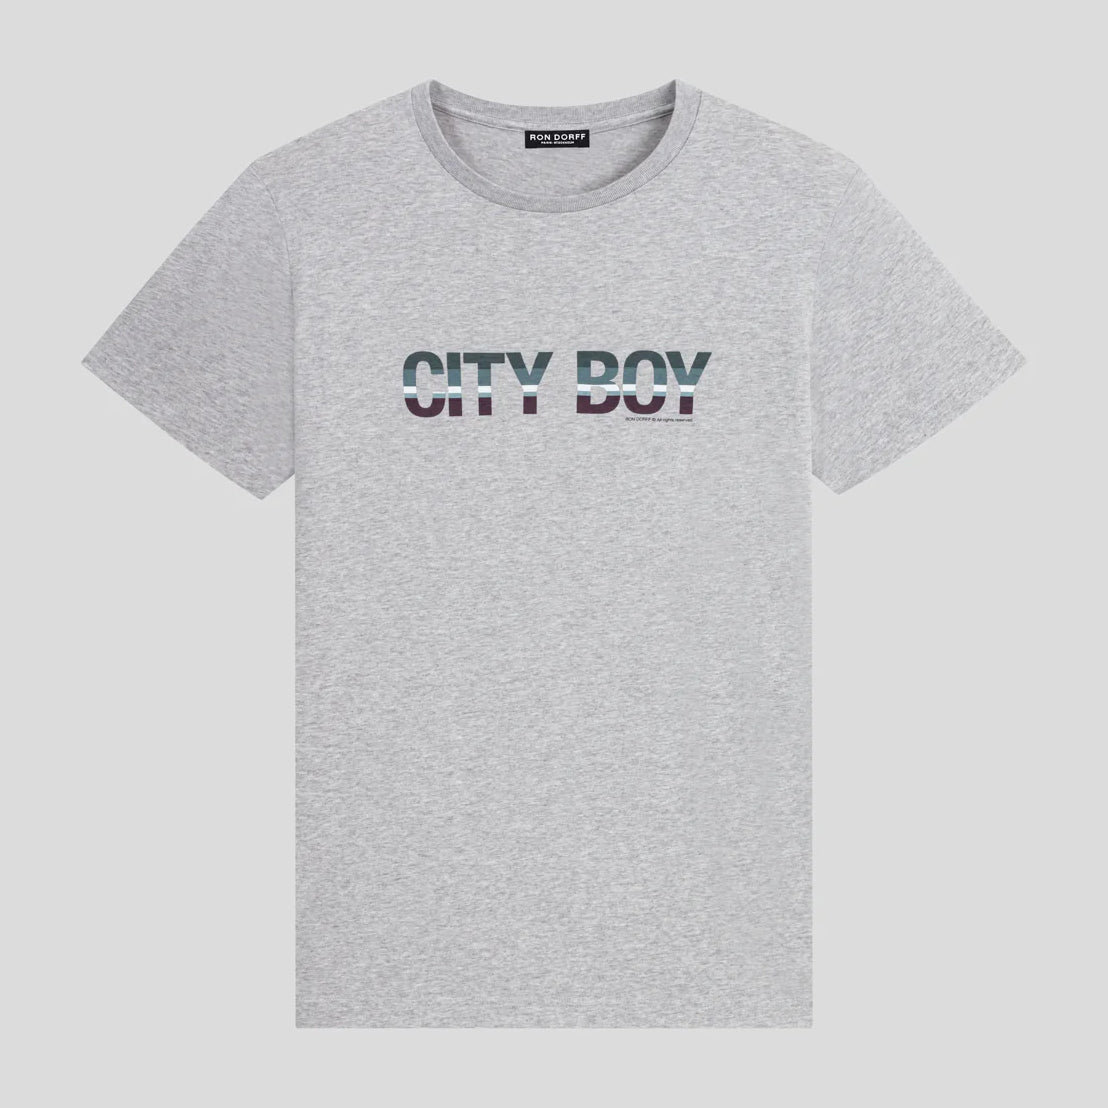 City Boy T-Shirt. Ron Dorff